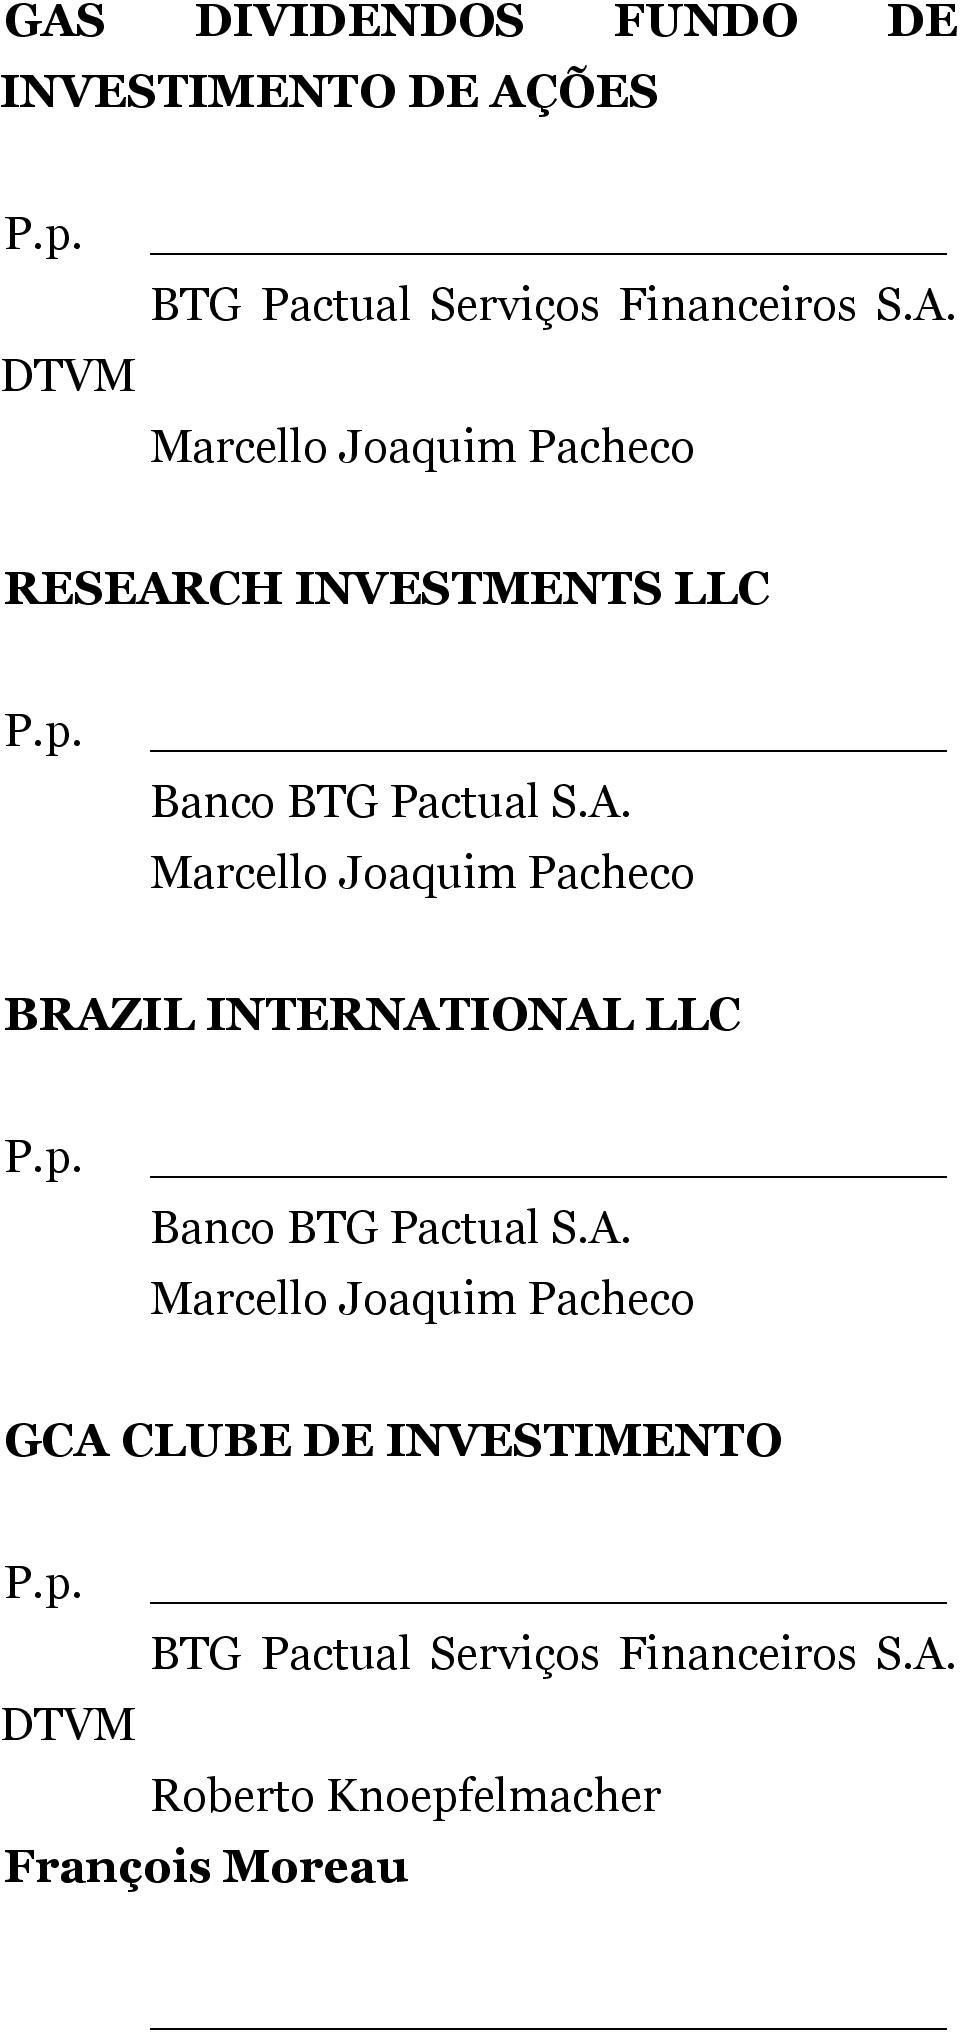 Banco BTG Pactual S.A. BRAZIL INTERNATIONAL LLC P.p. Banco BTG Pactual S.A. GCA CLUBE DE INVESTIMENTO P.